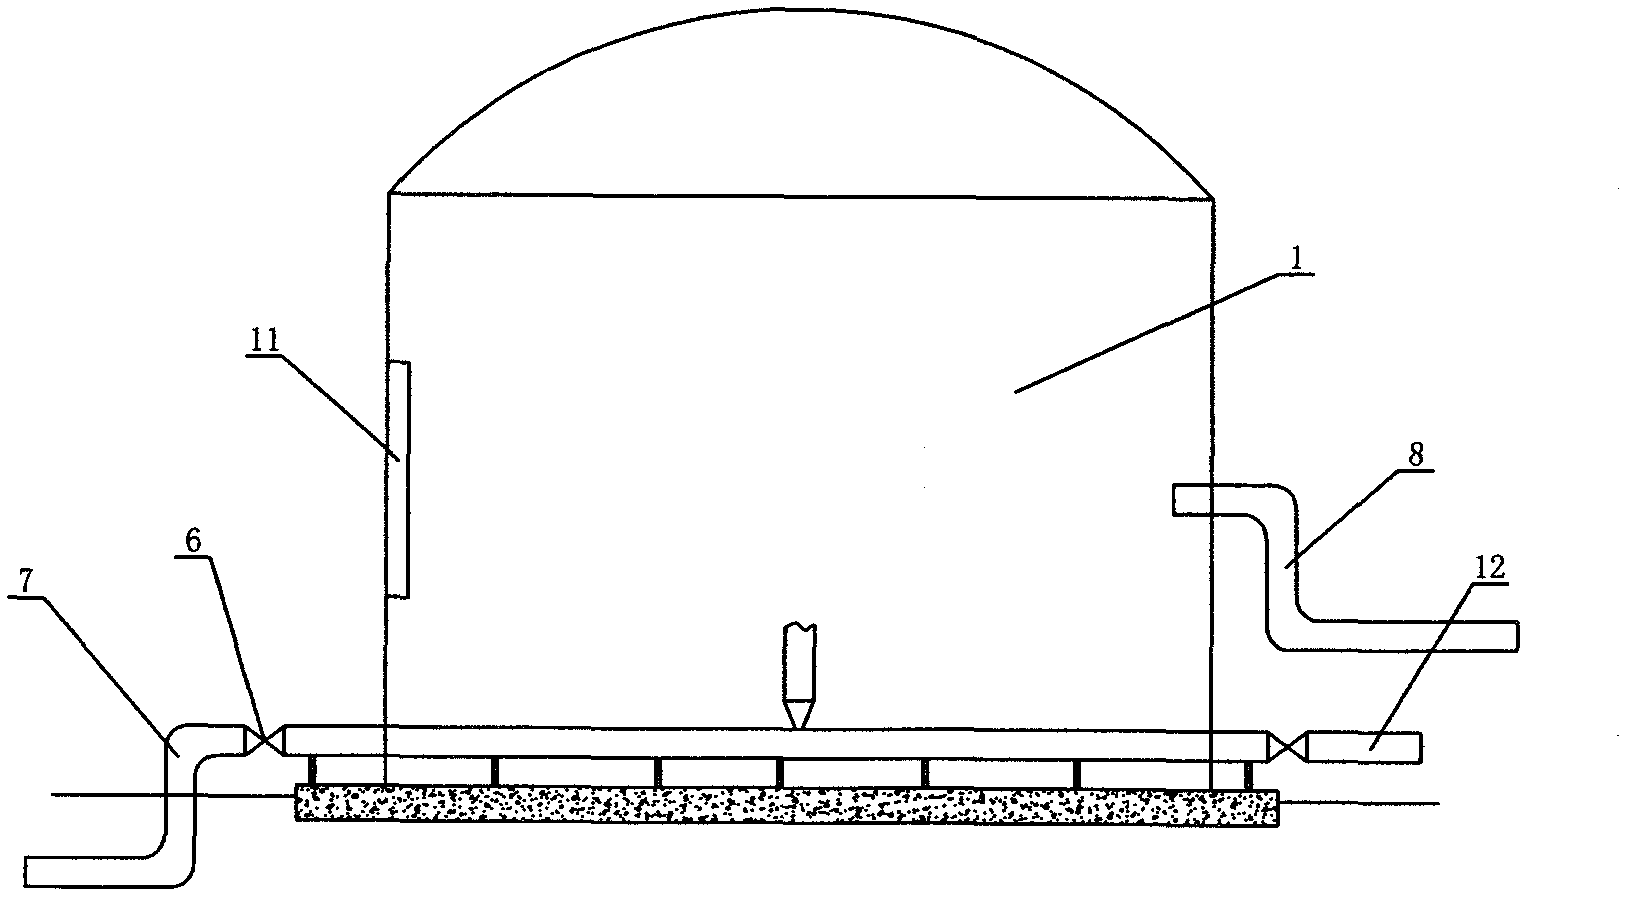 Fermentation tank for biogas engineering